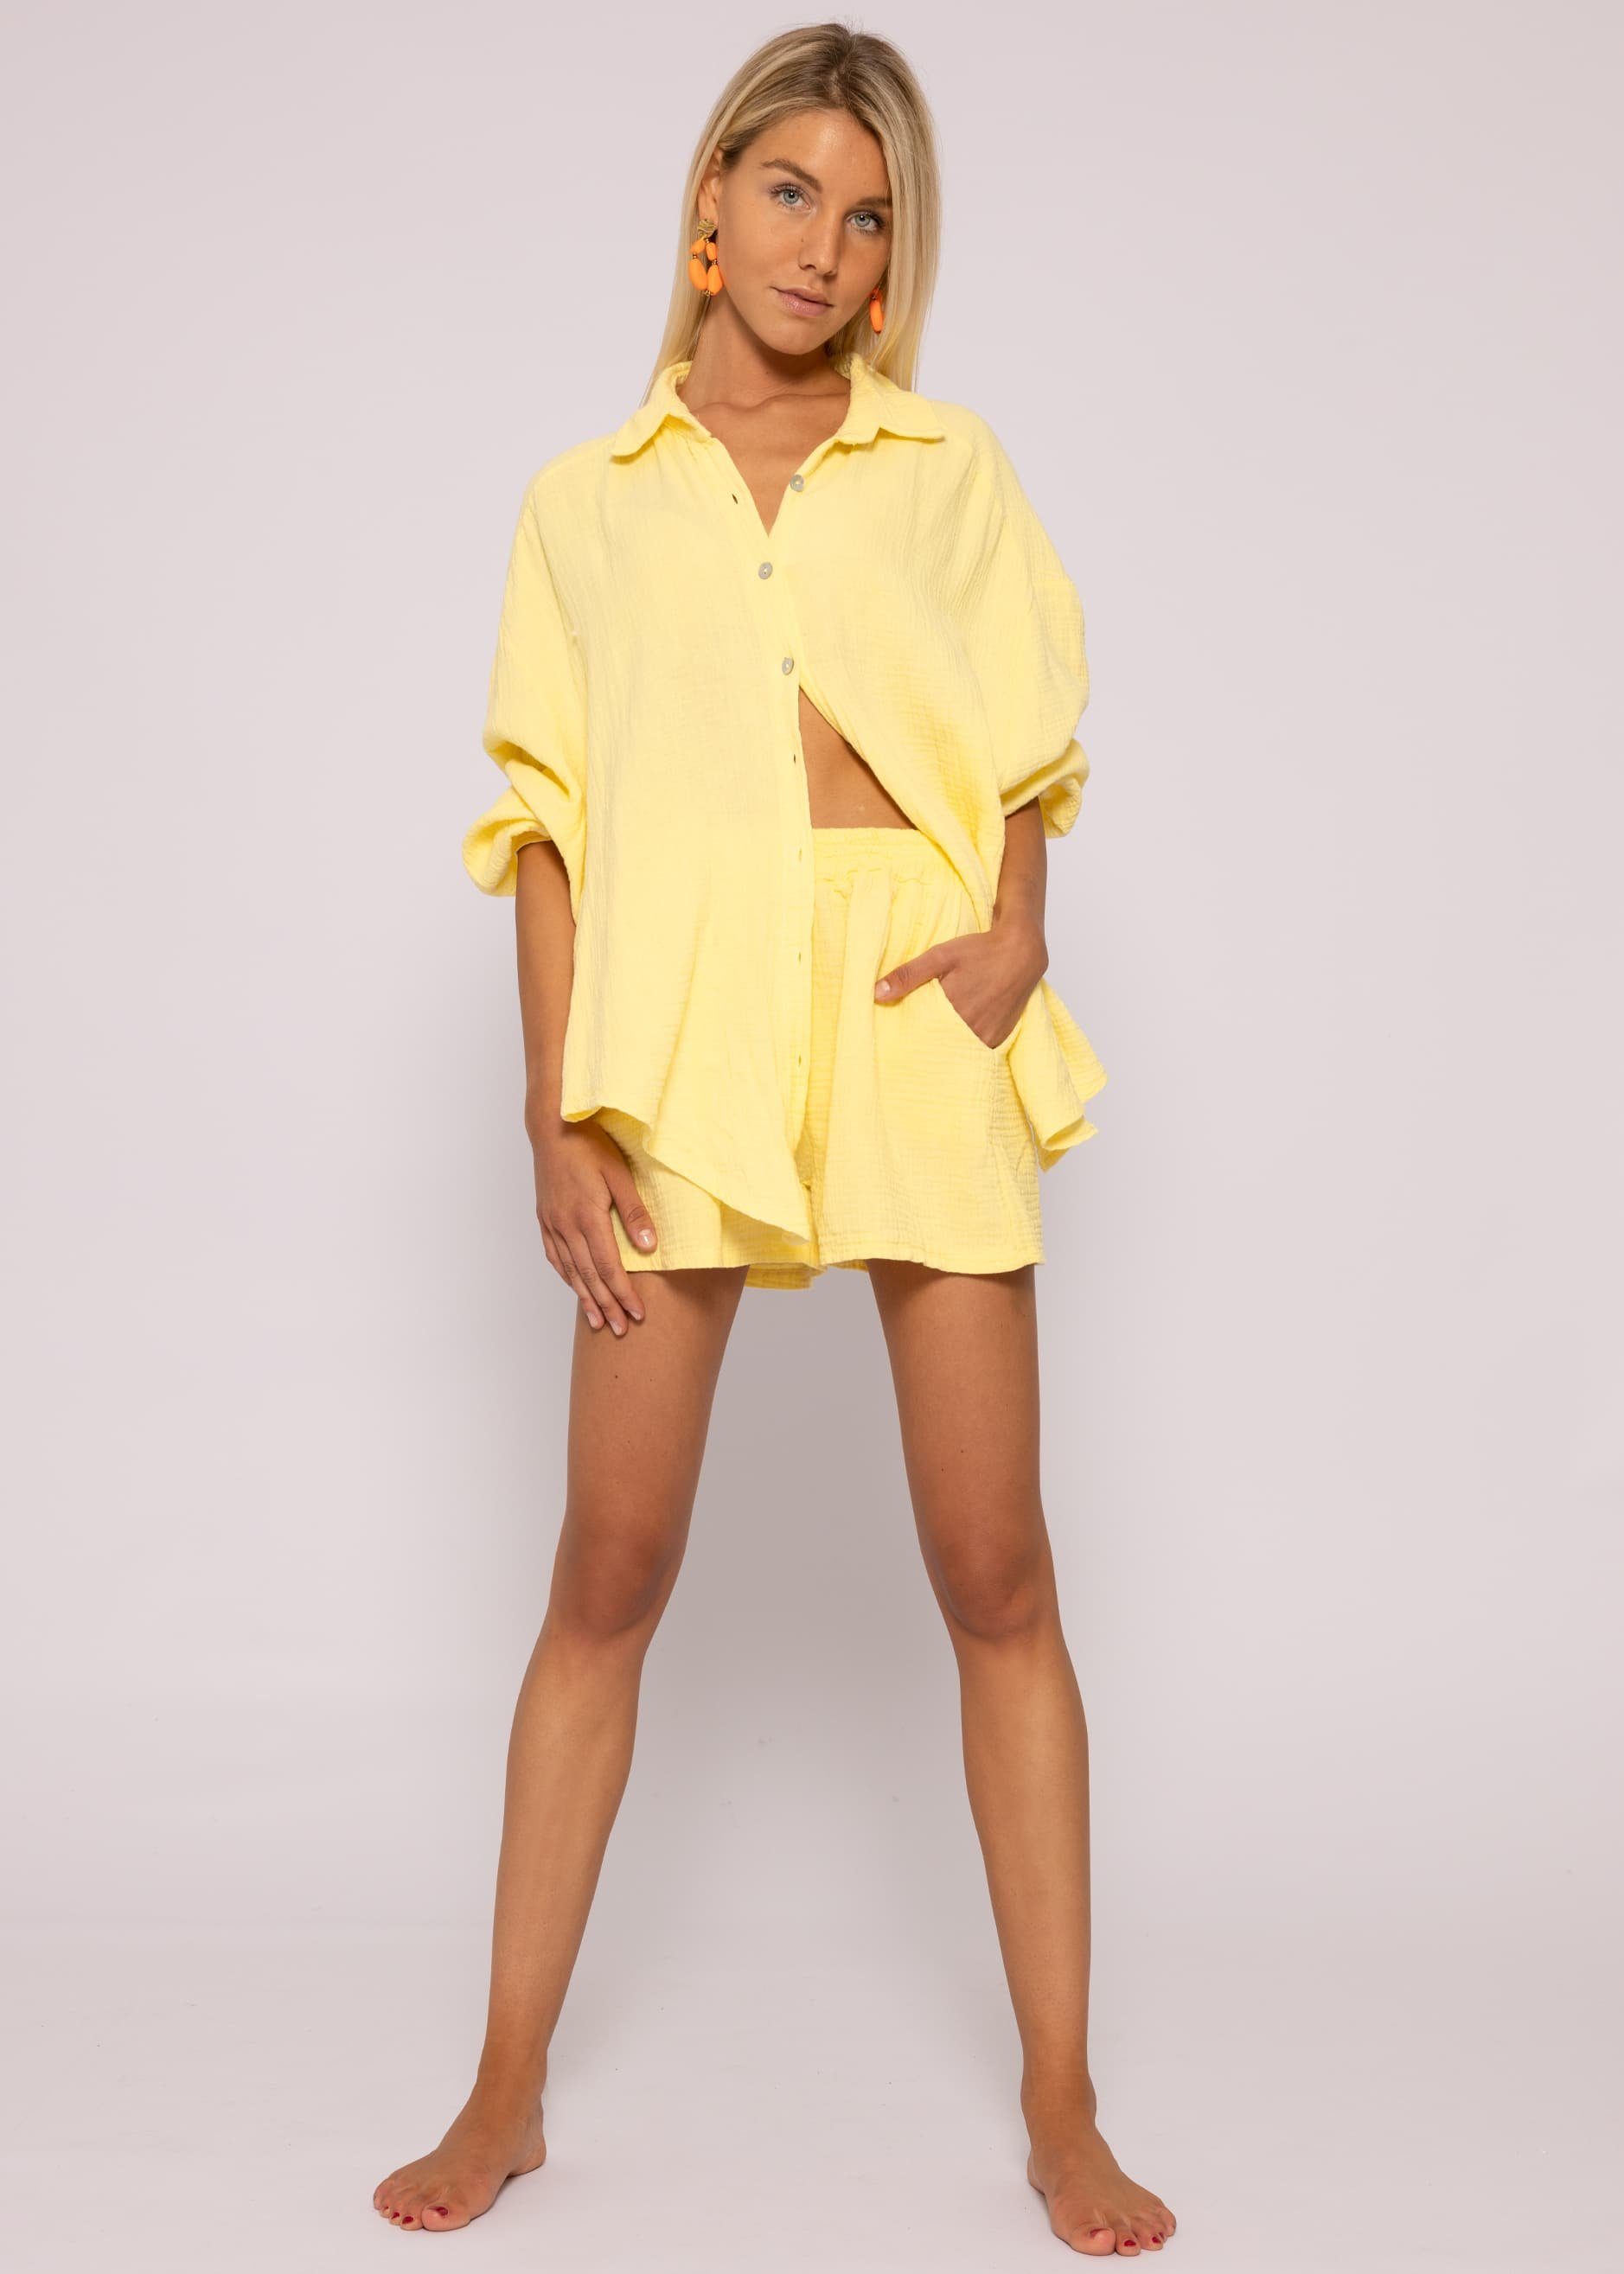 100 in Damen Made Hose Baumwolle Shorts atmungsaktiv, Kurz Gelb SASSYCLASSY (Musselin), % Sommer Musselin sehr Italy leicht,